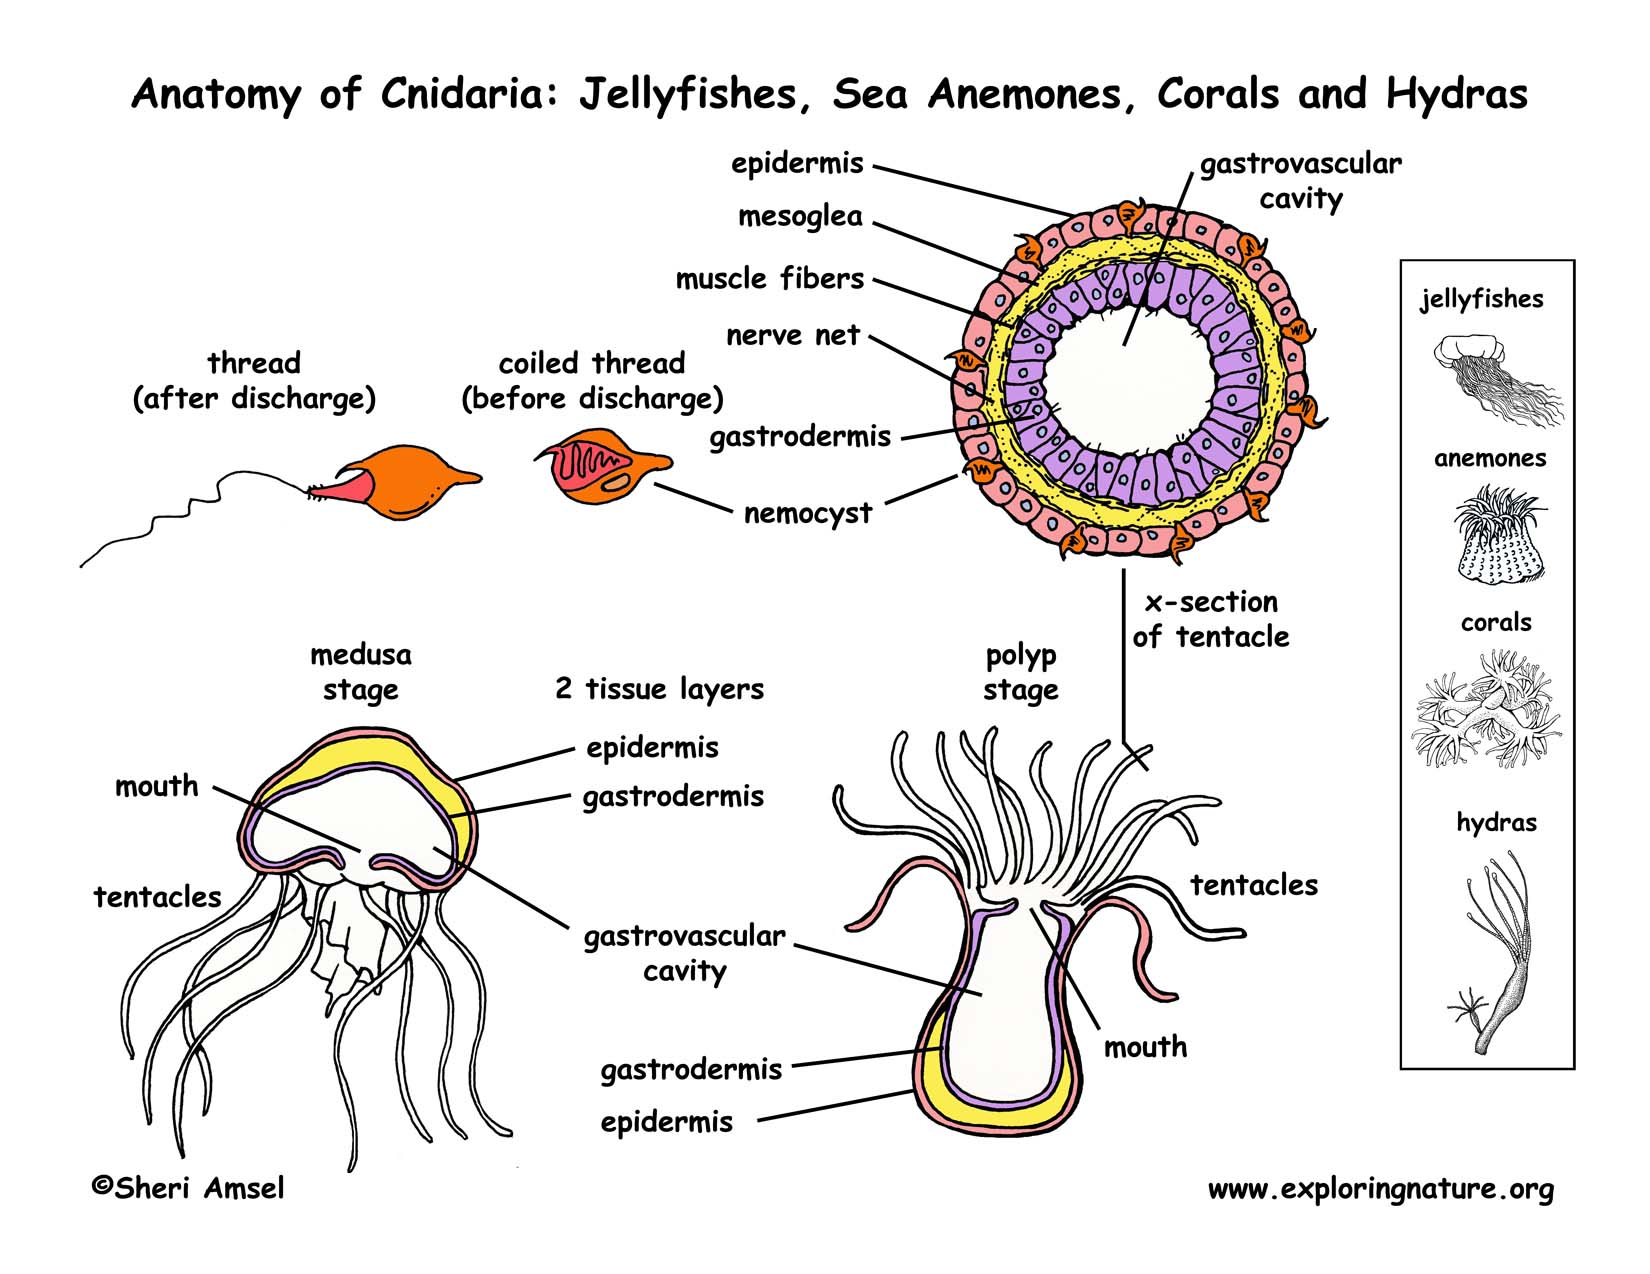 Phylum - Cnidaria (Jellyfish, Anemones, Corals, Hydras)